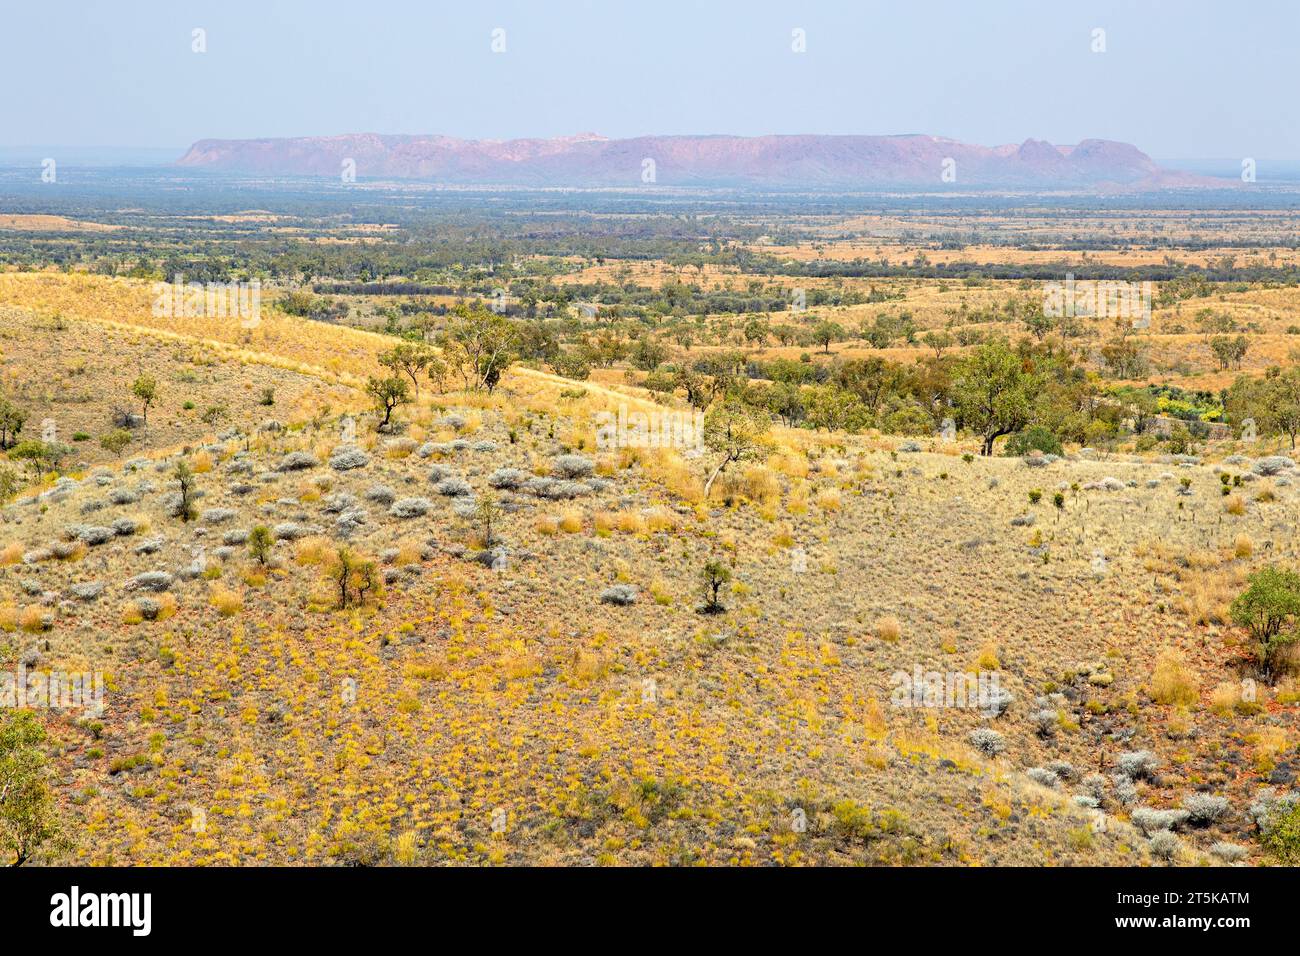 View across the desert to Tnorala (Gosse Bluff) Stock Photo